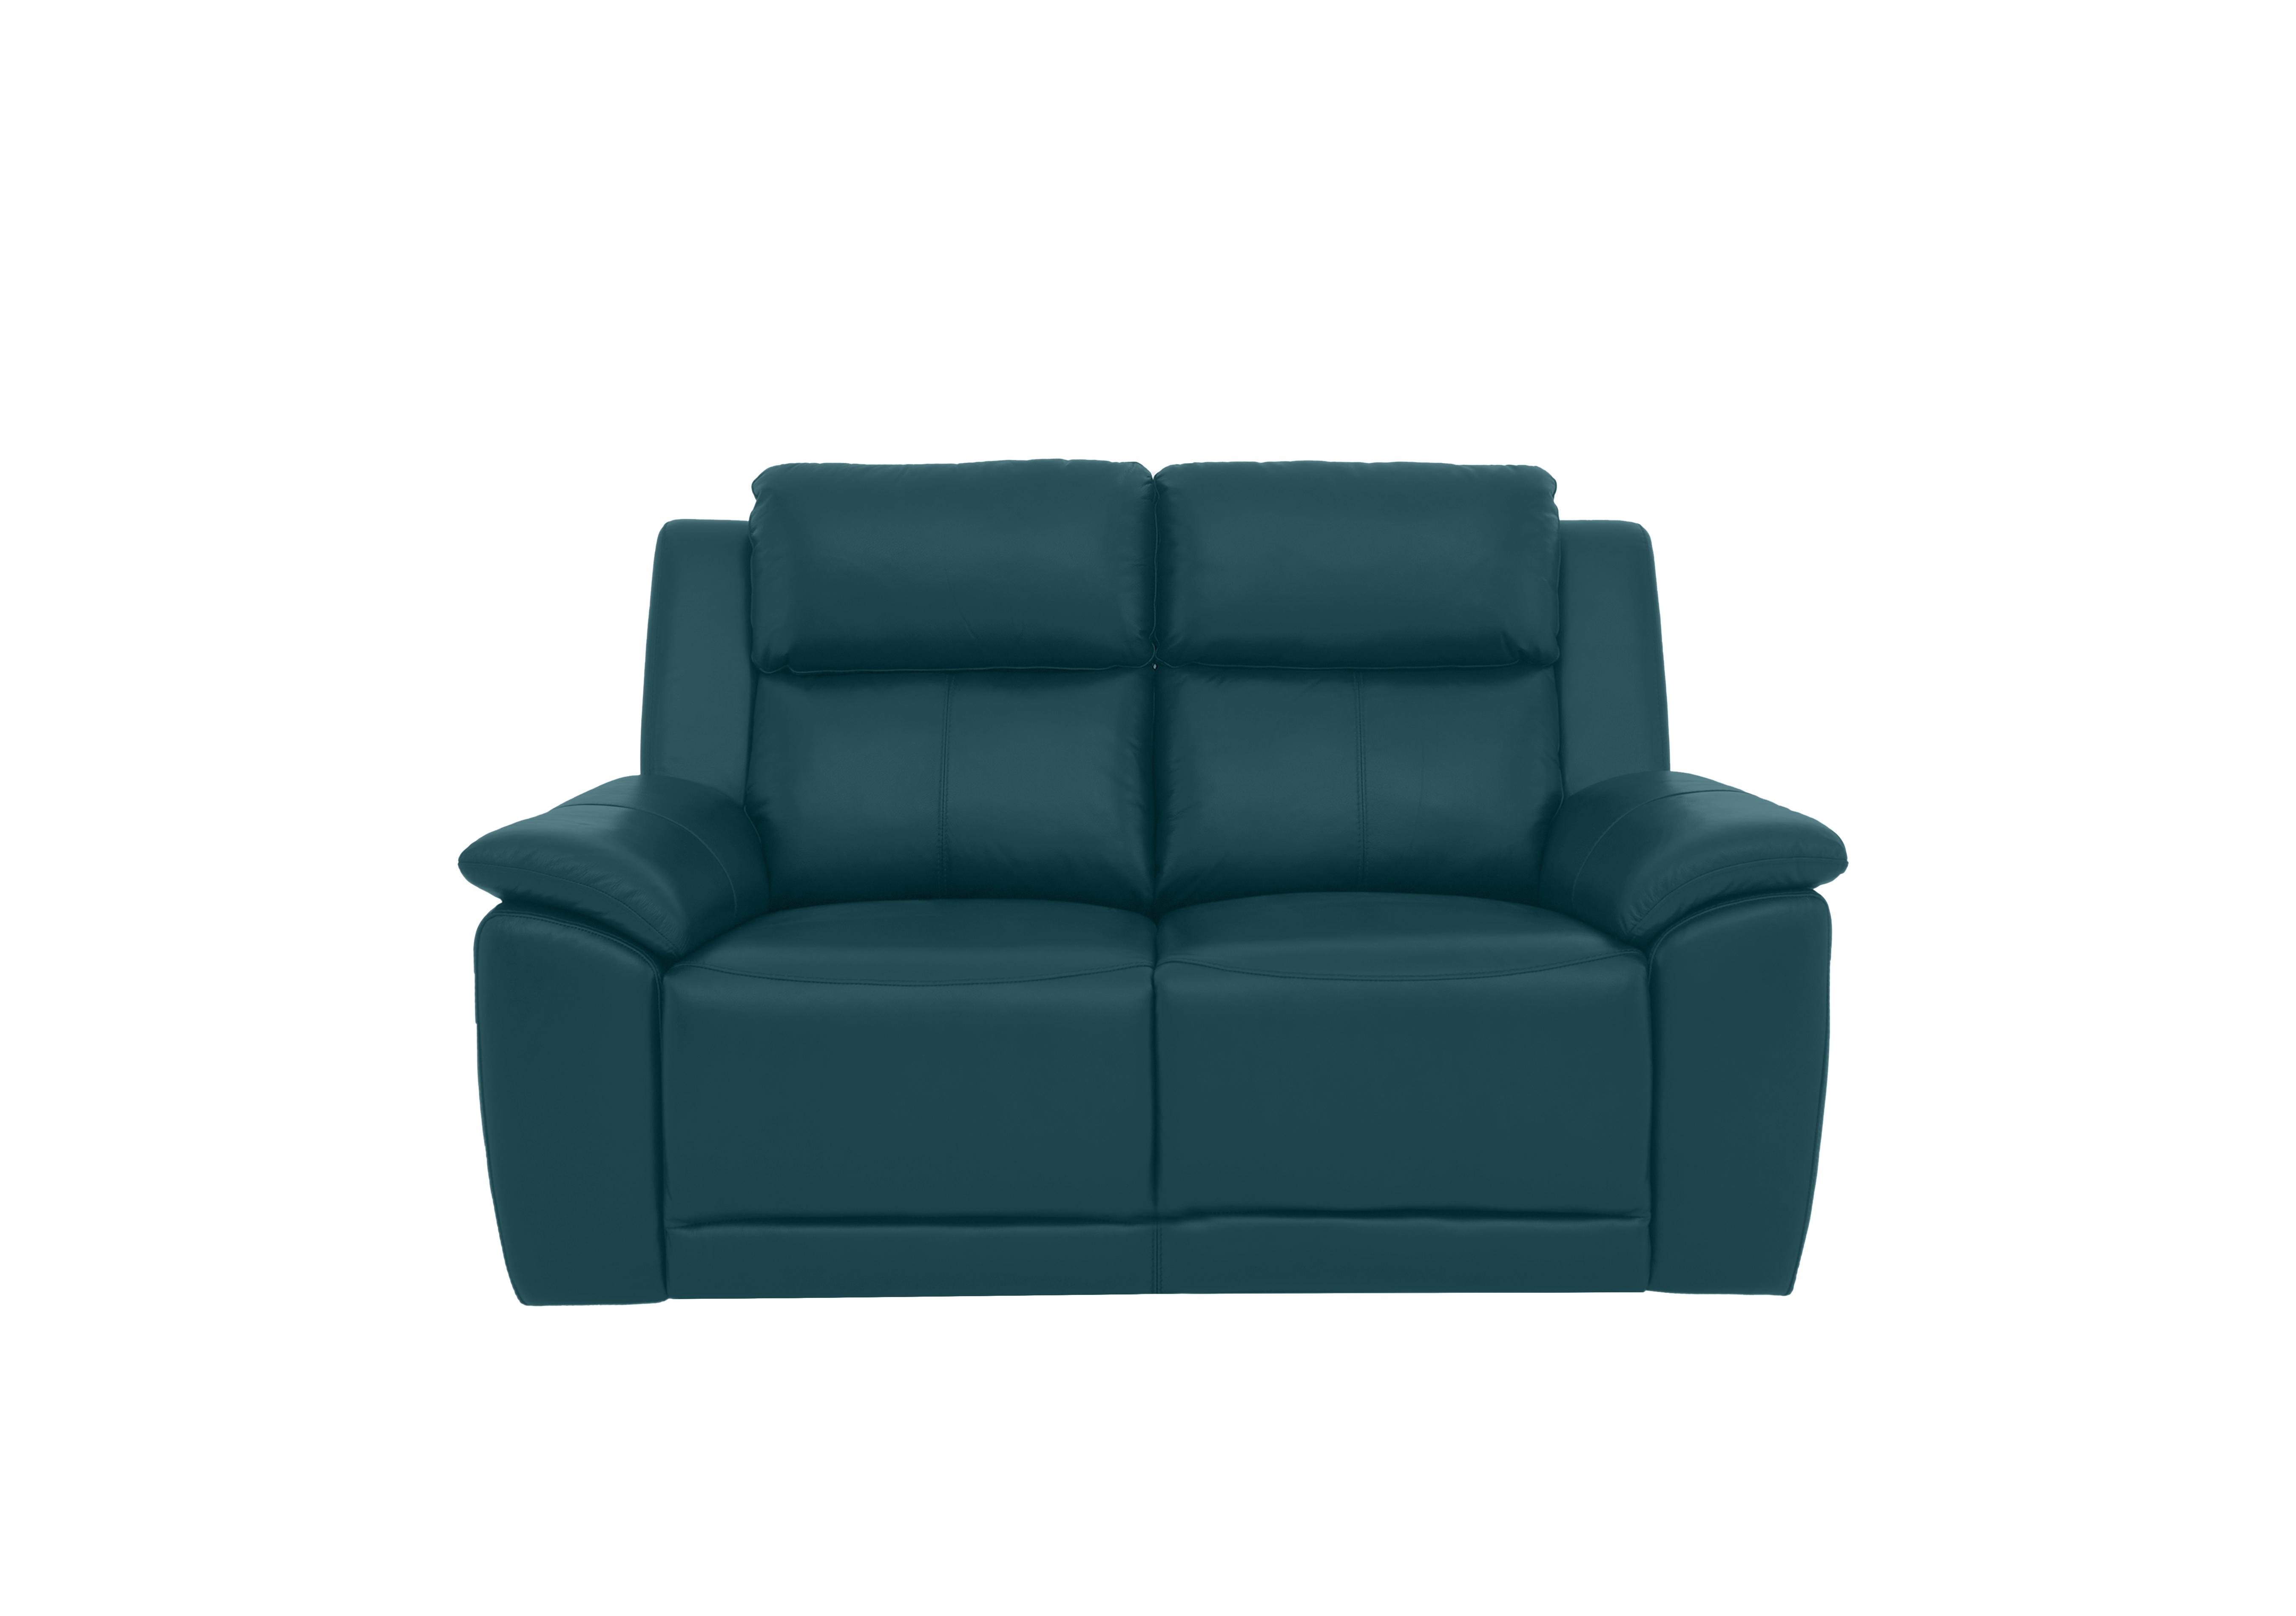 Utah 2 Seater Leather Sofa in Midnight Jade Le-9314 on Furniture Village